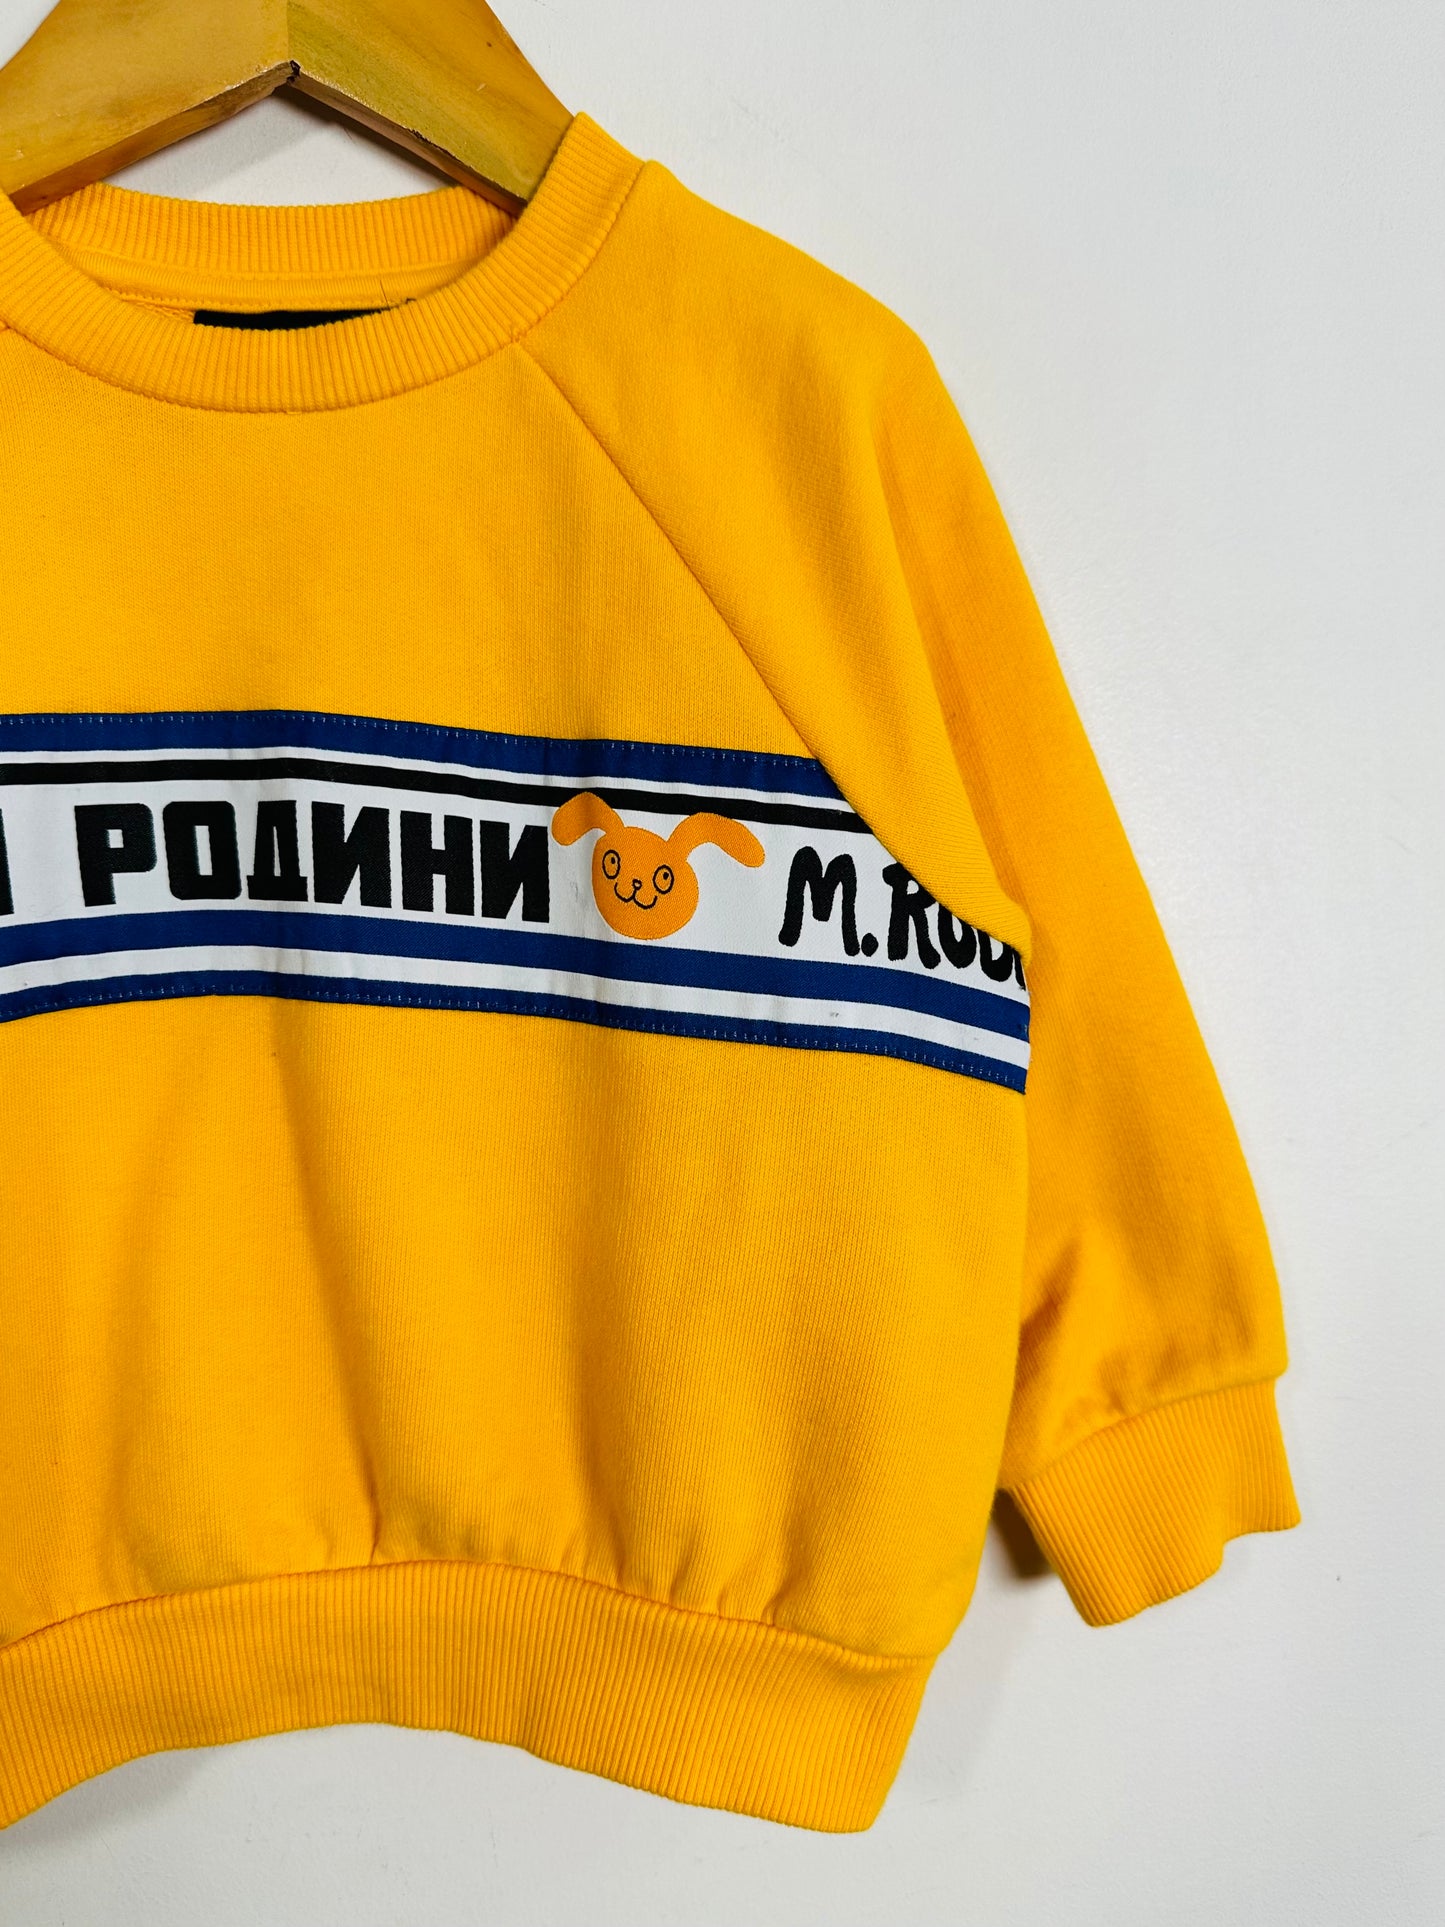 Mini Rodini Branded Sweatshirt / 12-18M